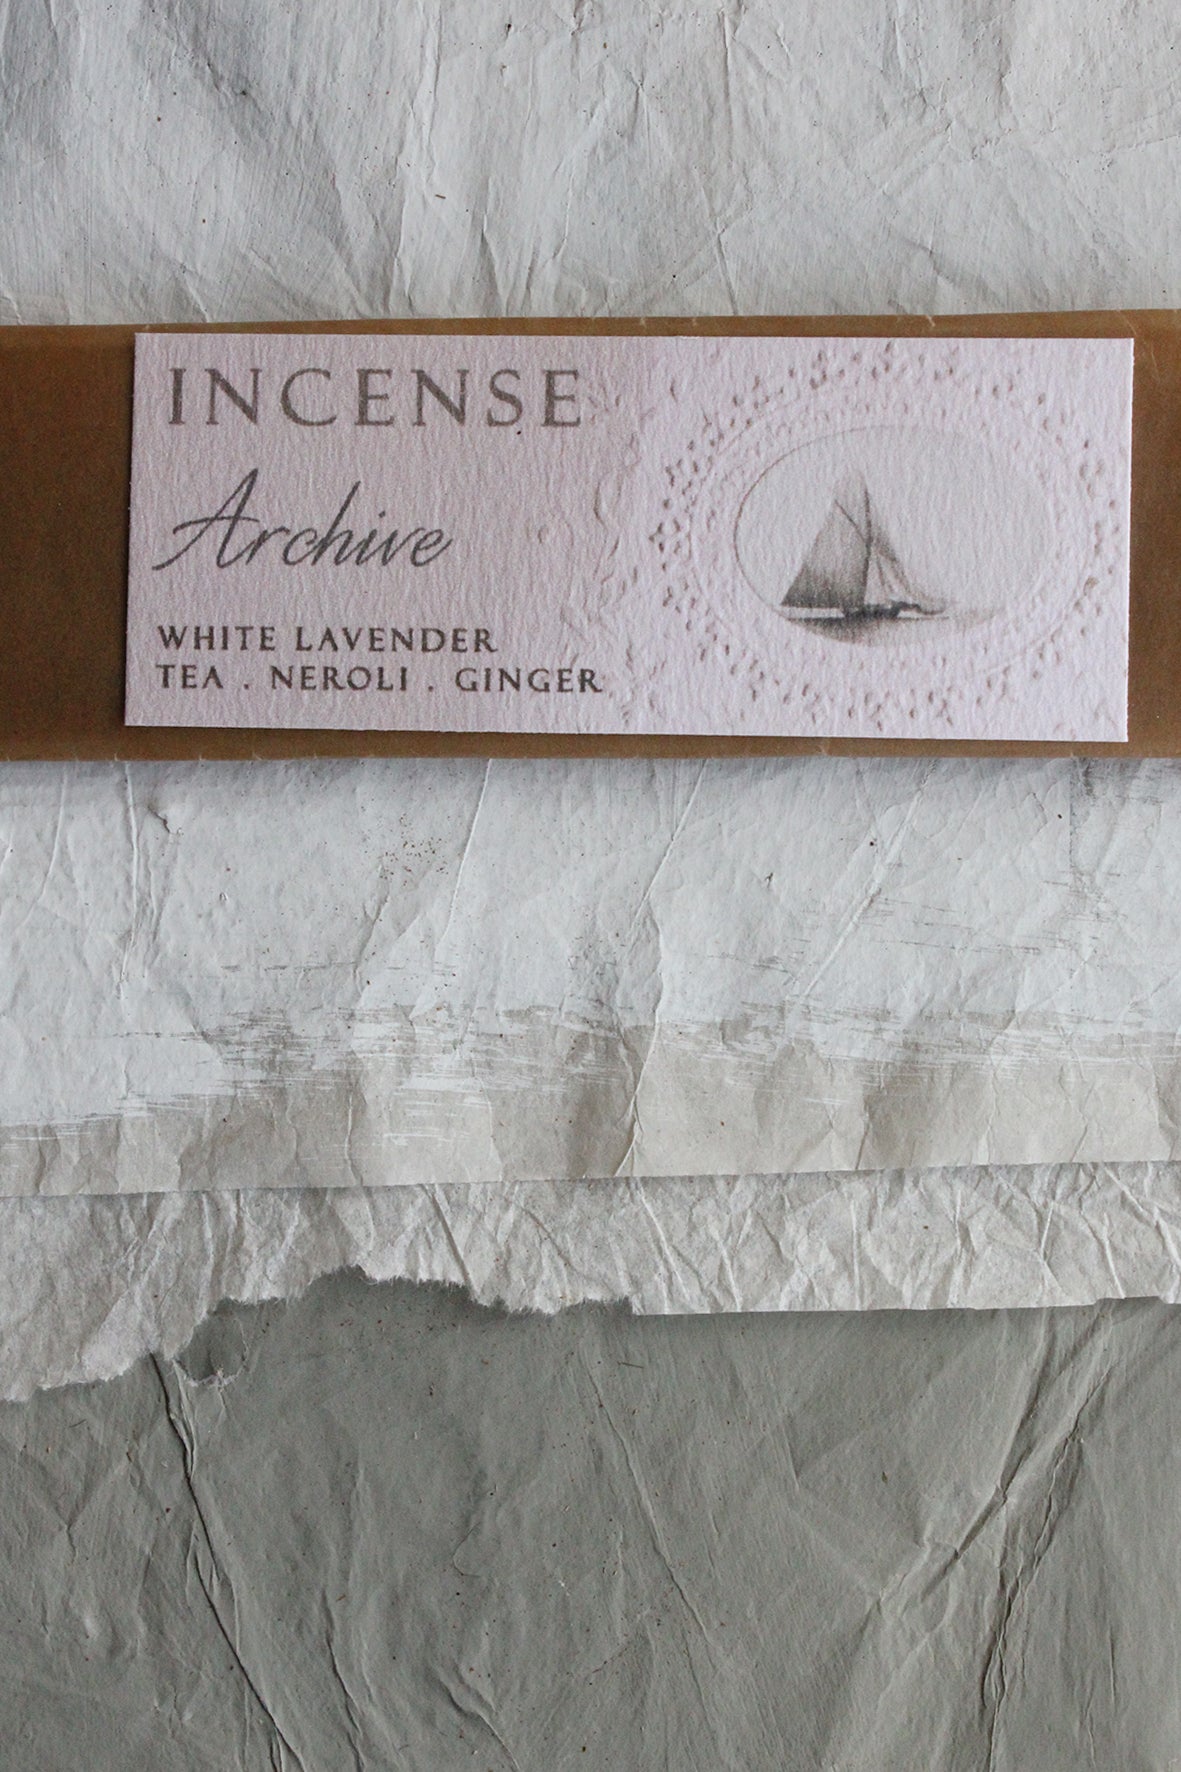 Incense - "Archive"